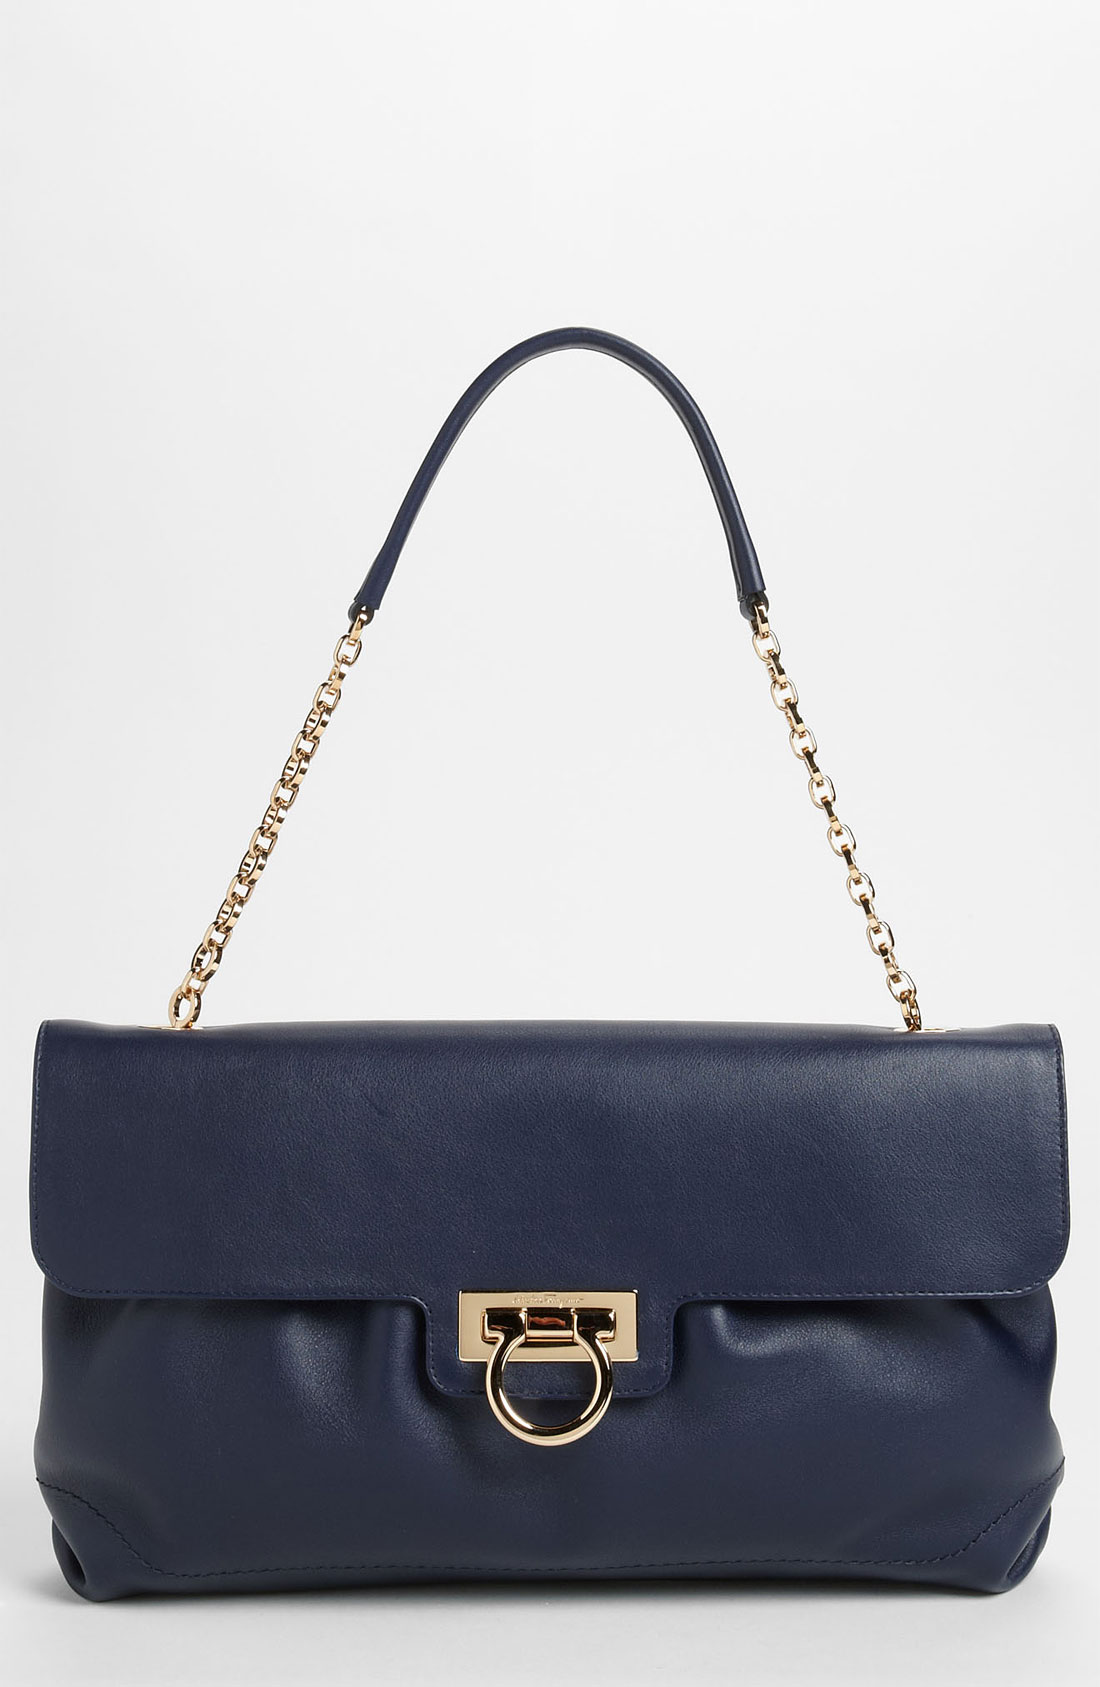 Ferragamo Chain Strap Leather Shoulder Bag in Blue (oxford blue) | Lyst